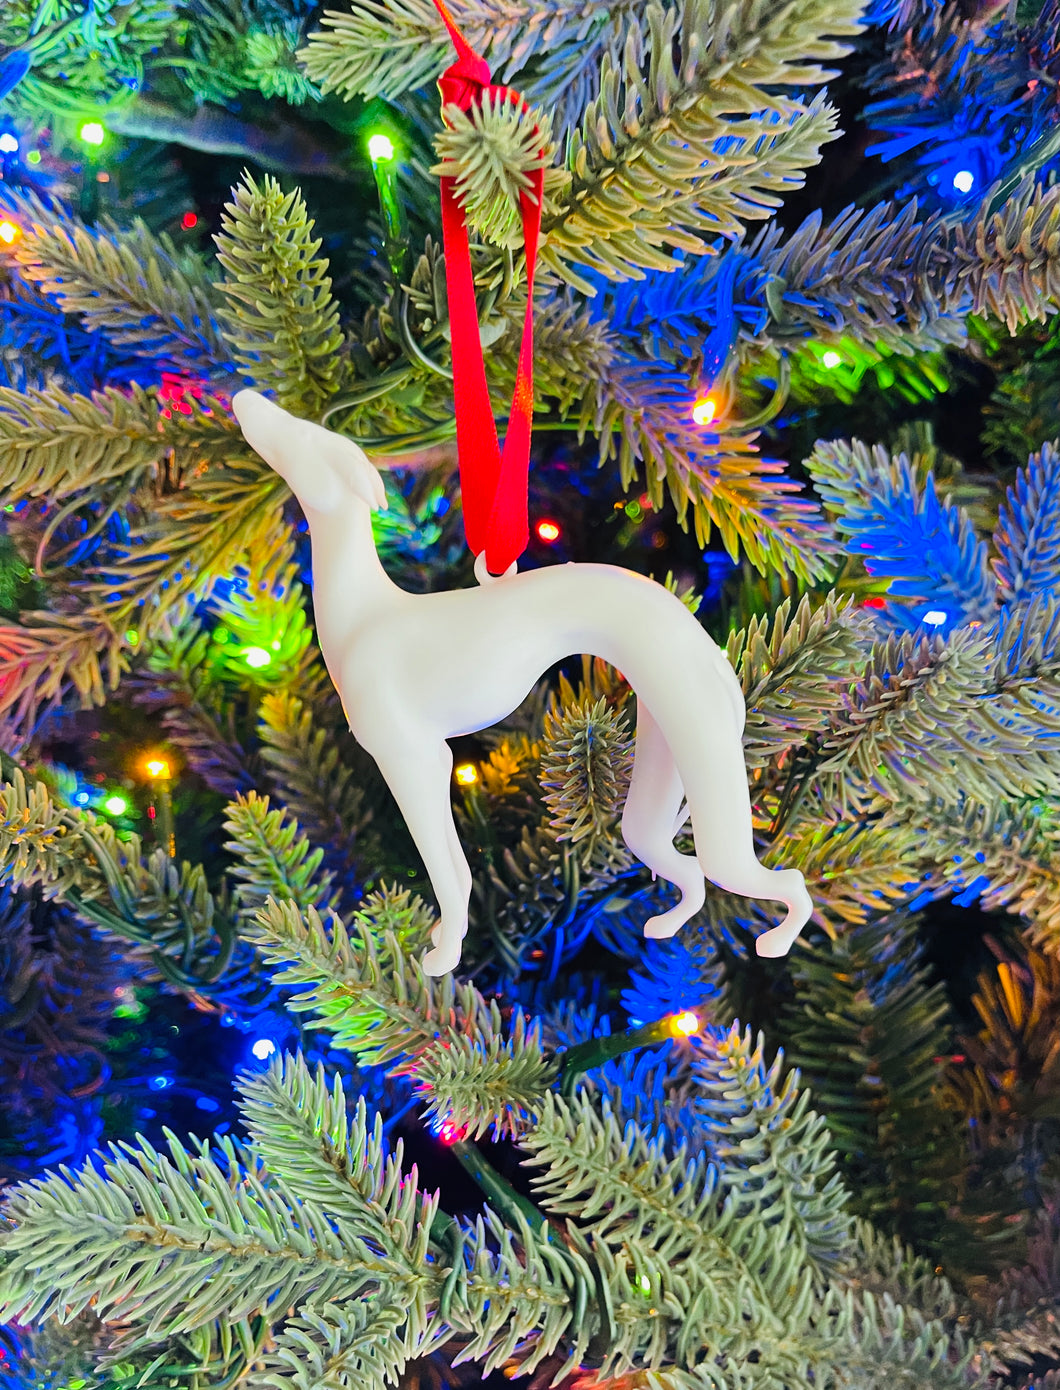 Friends Merch Figurine/ Pat the Dog/ White Greyhound/ Joey's Dog/ Friends TV Show Gift/ Pop Culture Christmas Ornament/ TV Show/ Replica